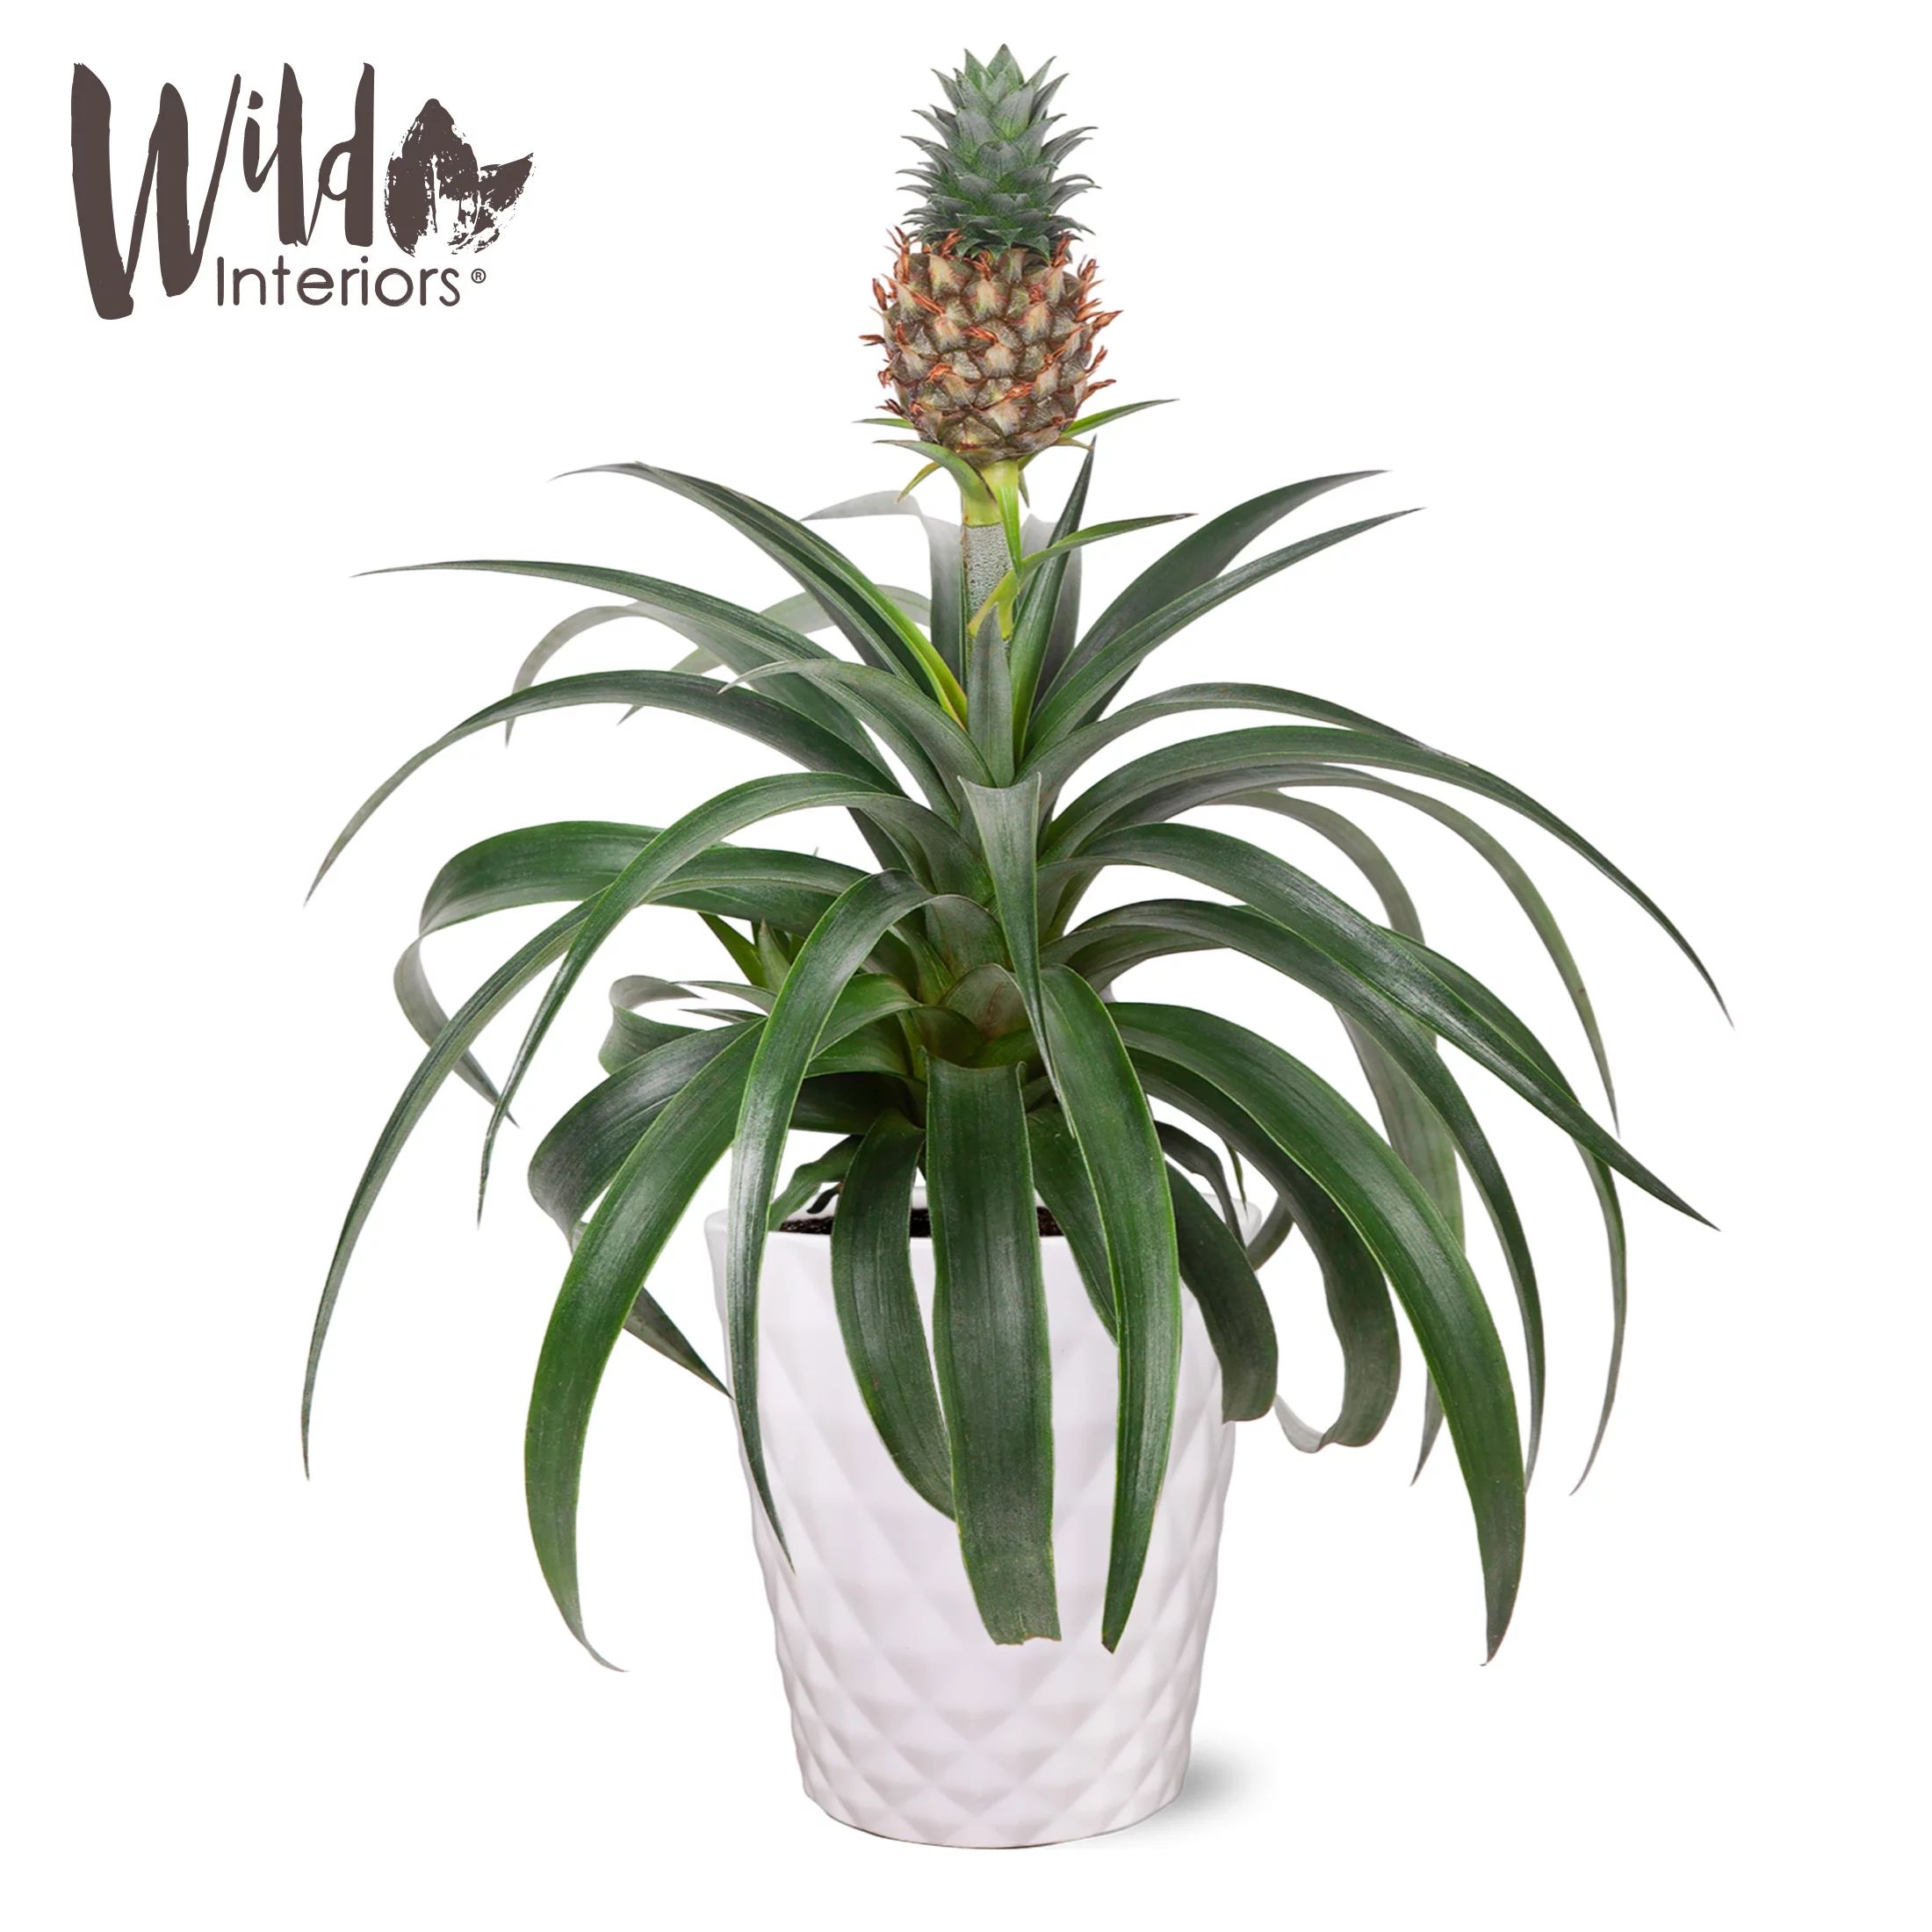 Wild Interiors 14" Tall Pineapple Bromeliad Live Plant in 5" Decorative Ceramic Pot, House Plant | Walmart (US)